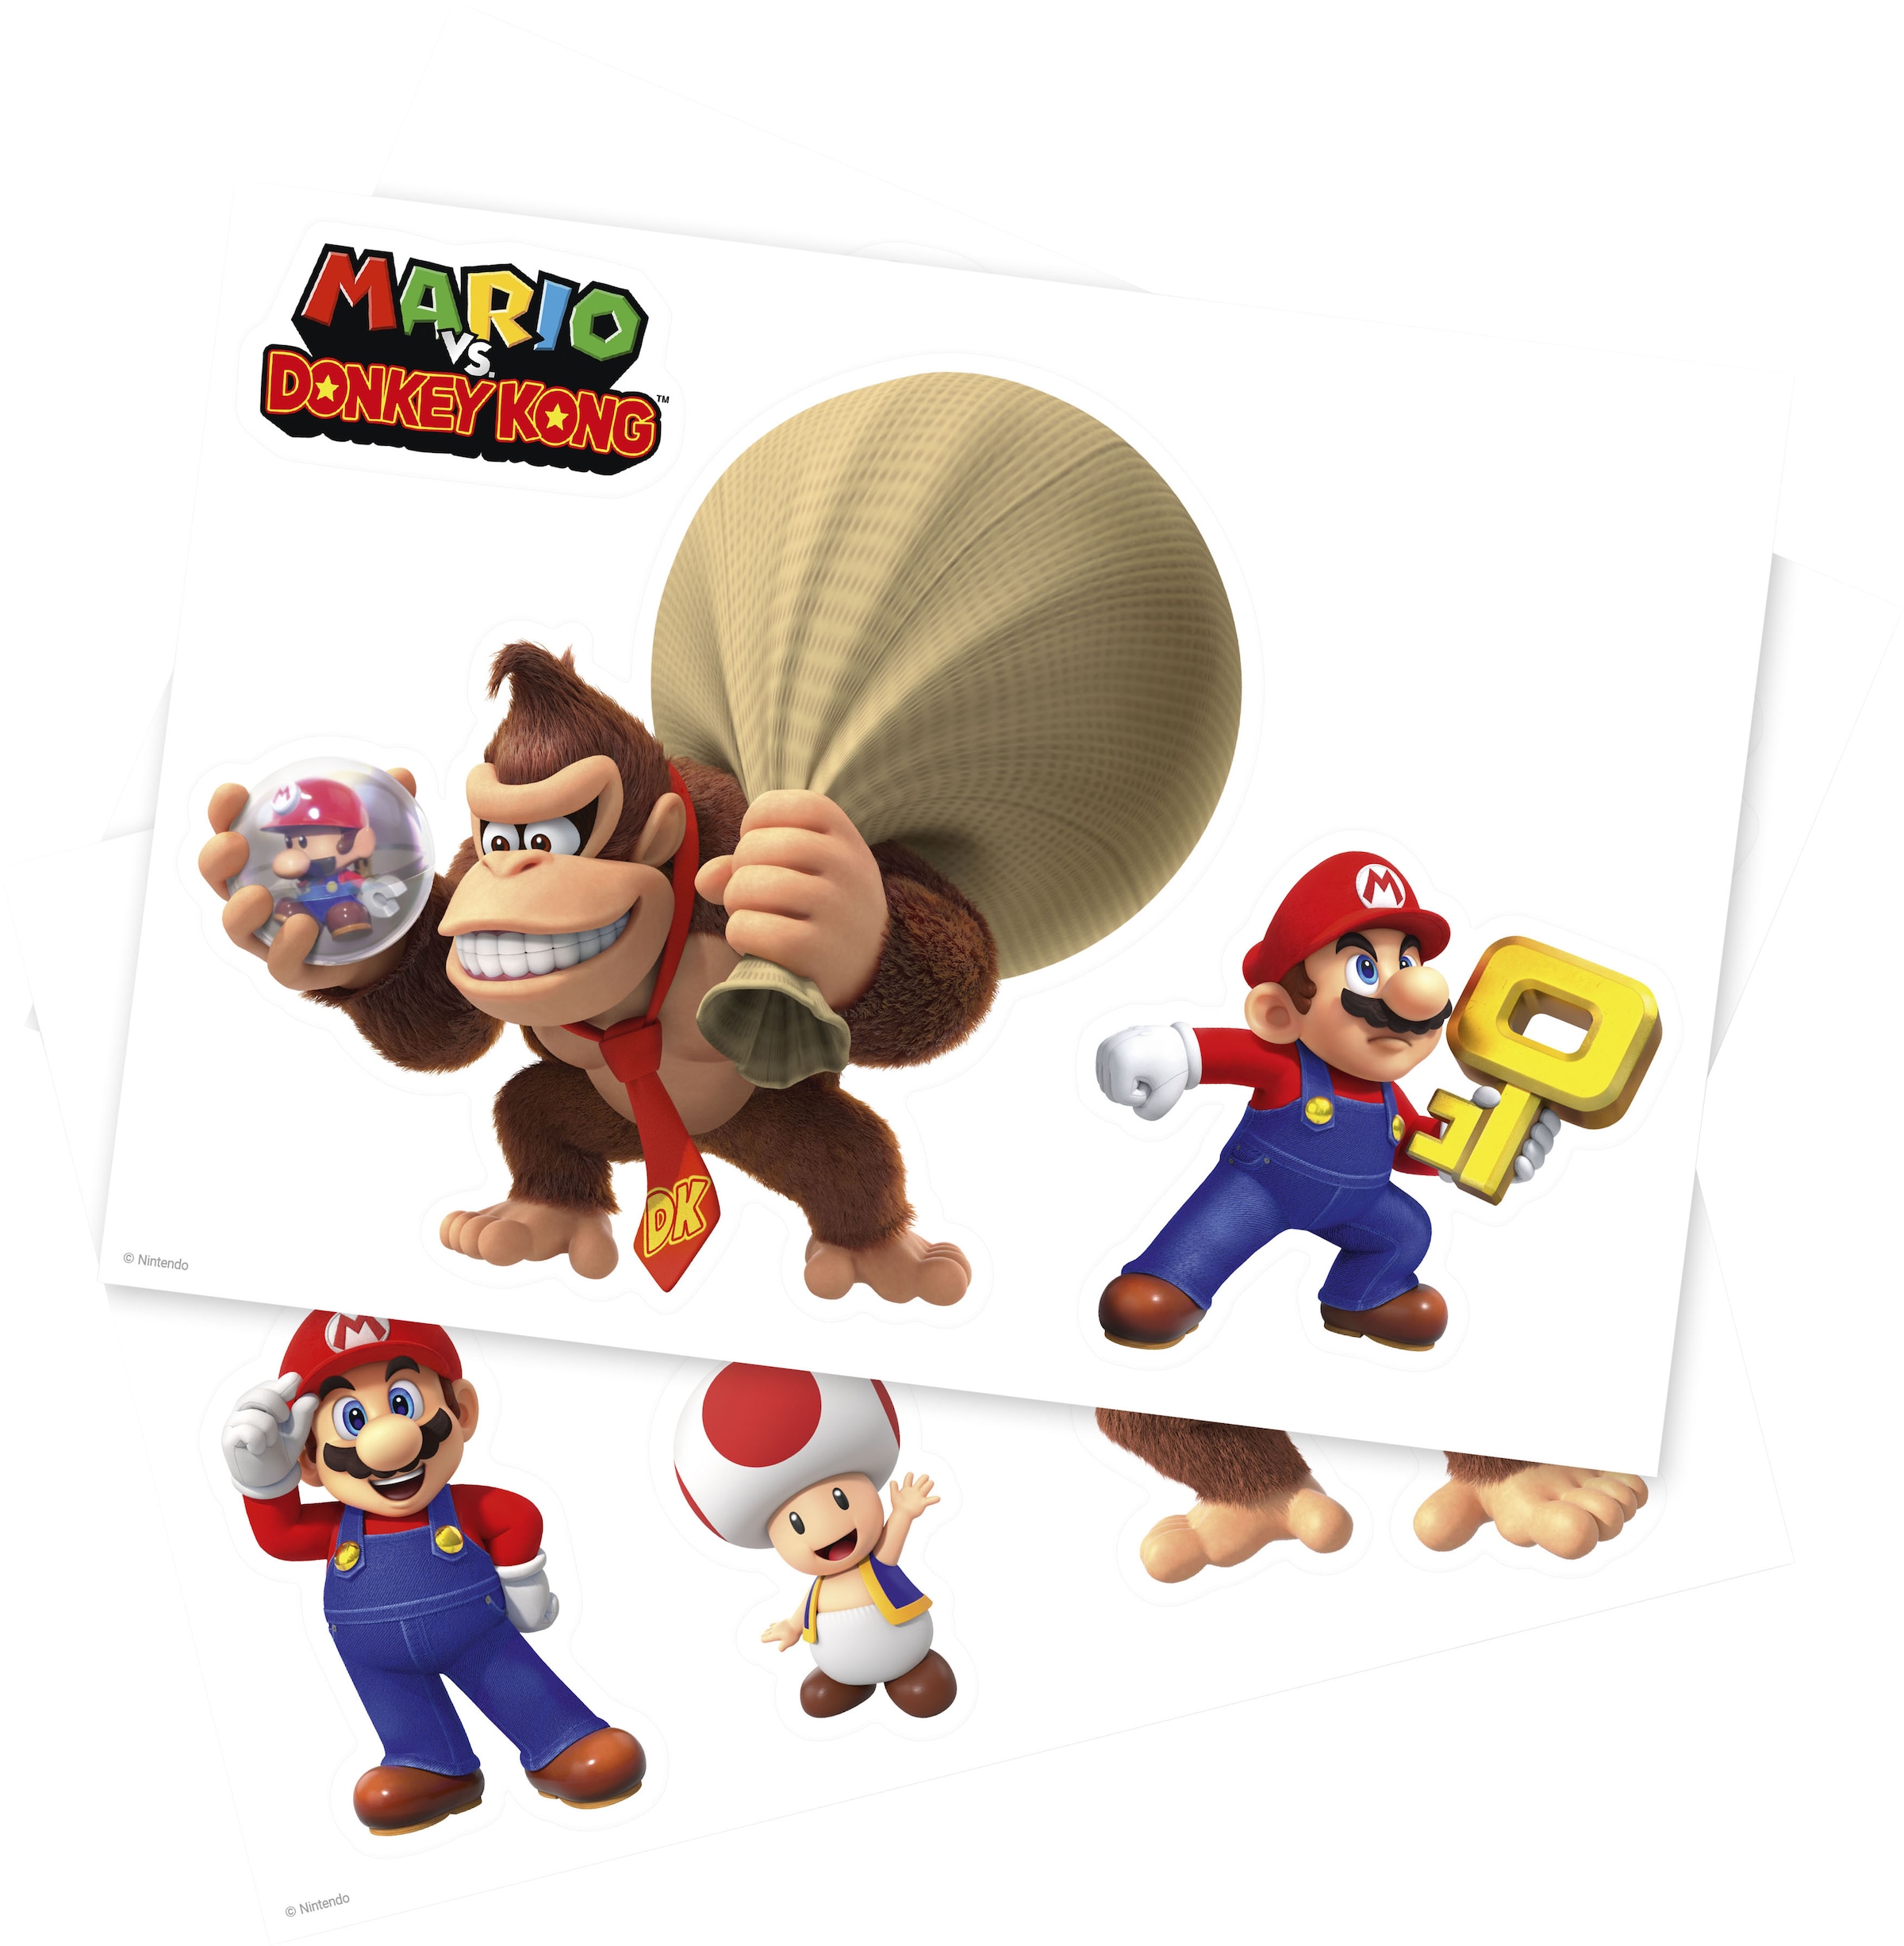 Nintendo Switch Spielesoftware »Mario vs. Donkey Kong«, Nintendo Switch